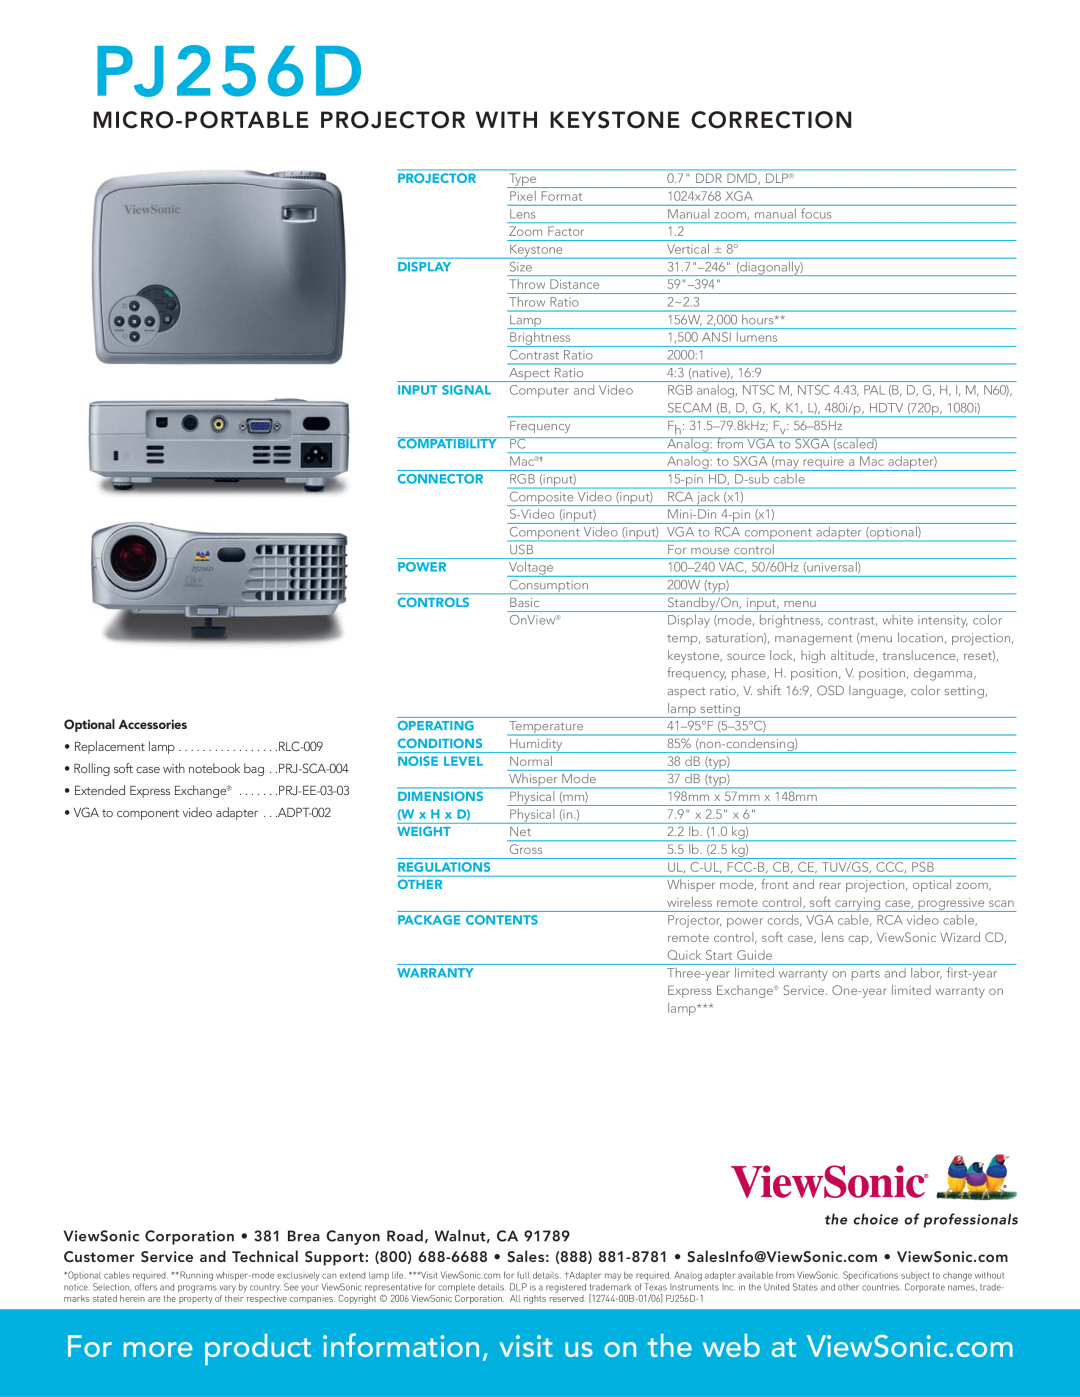 ViewSonic PJ256D warranty Micro-Portableprojector With Keystone Correction 